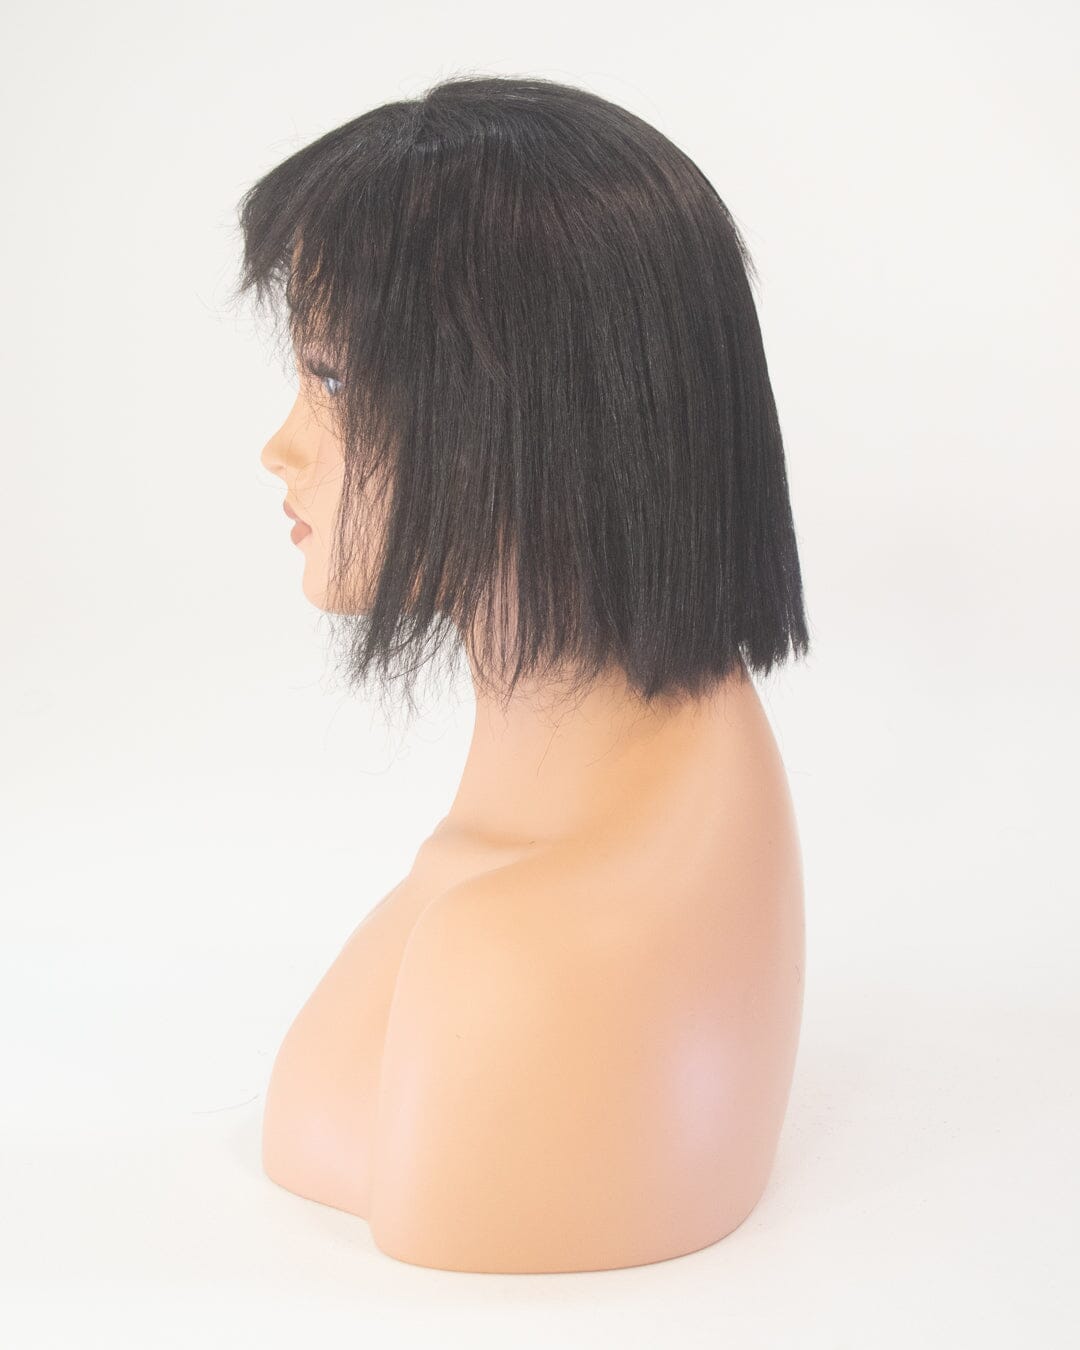 Black 30cm Synthetic Hair Wig